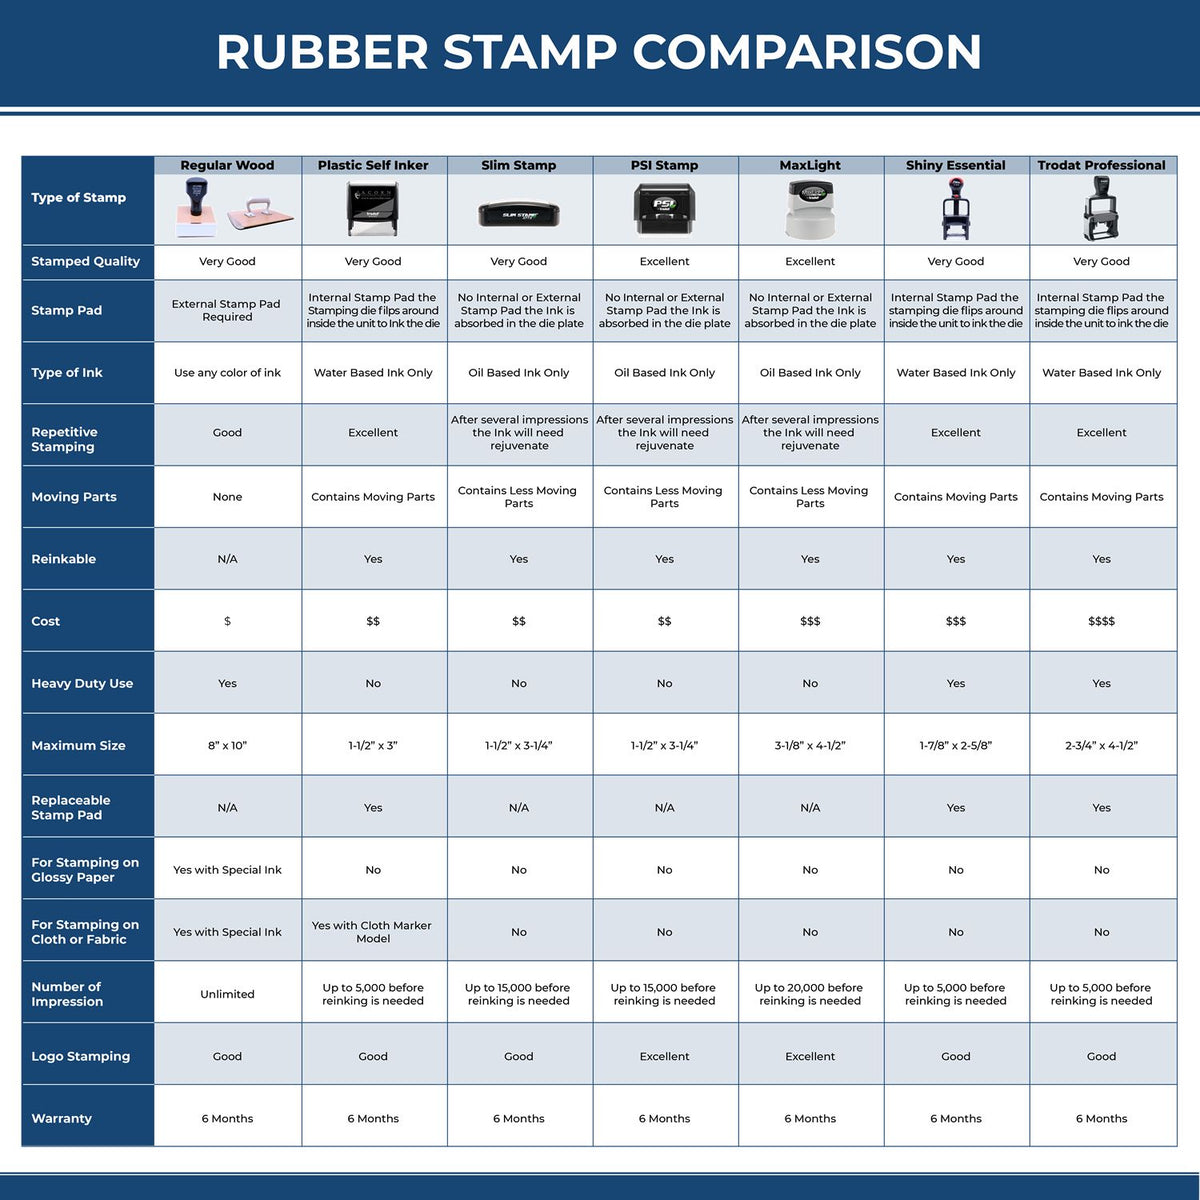 Official Transcript Rubber Stamp 4371R Rubber Stamp Comparison